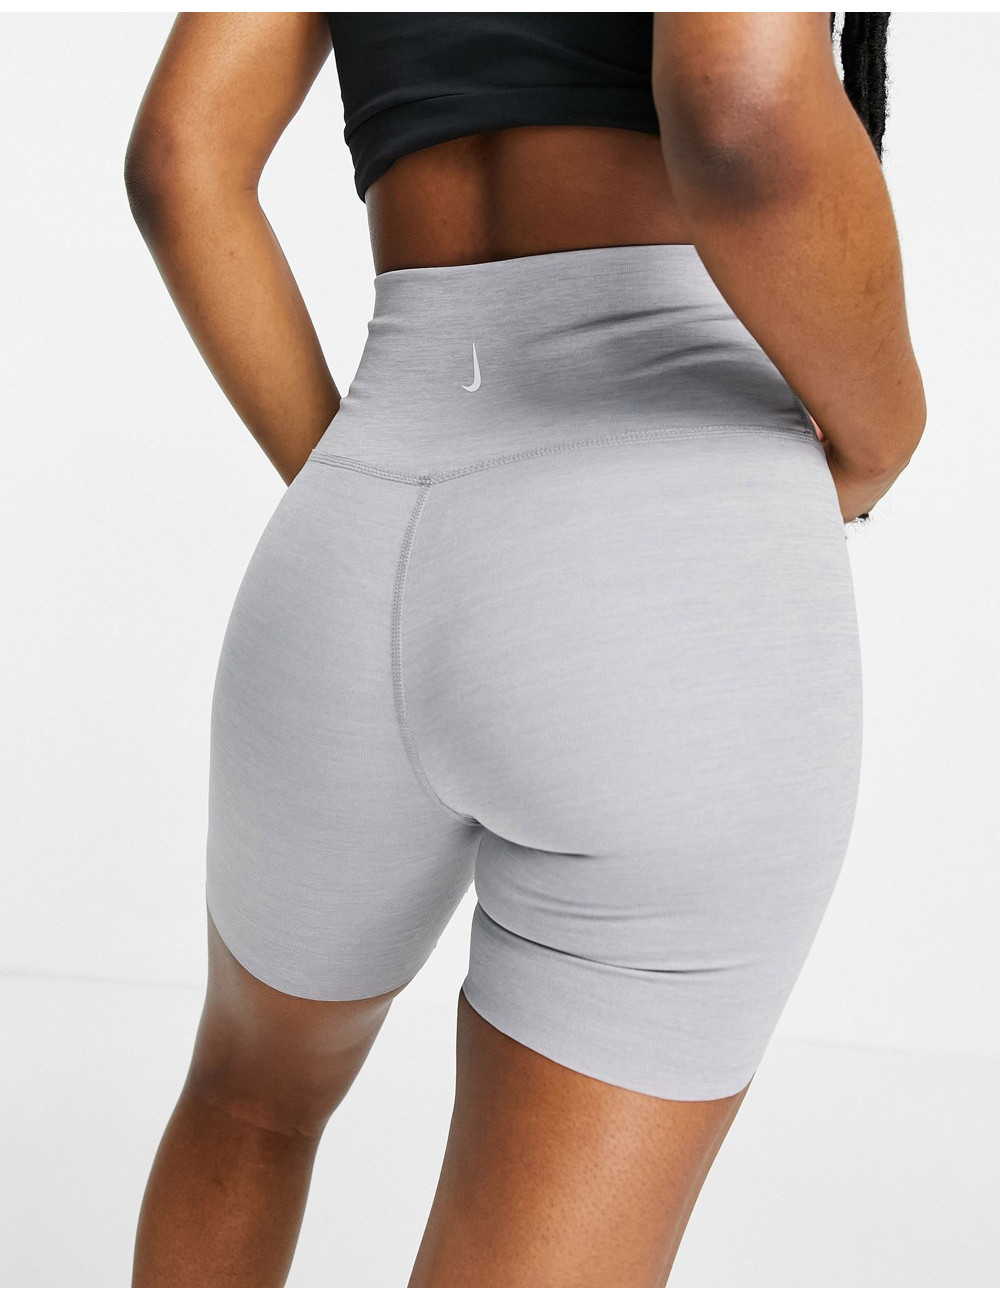 Nike Yoga luxe shorts in grey